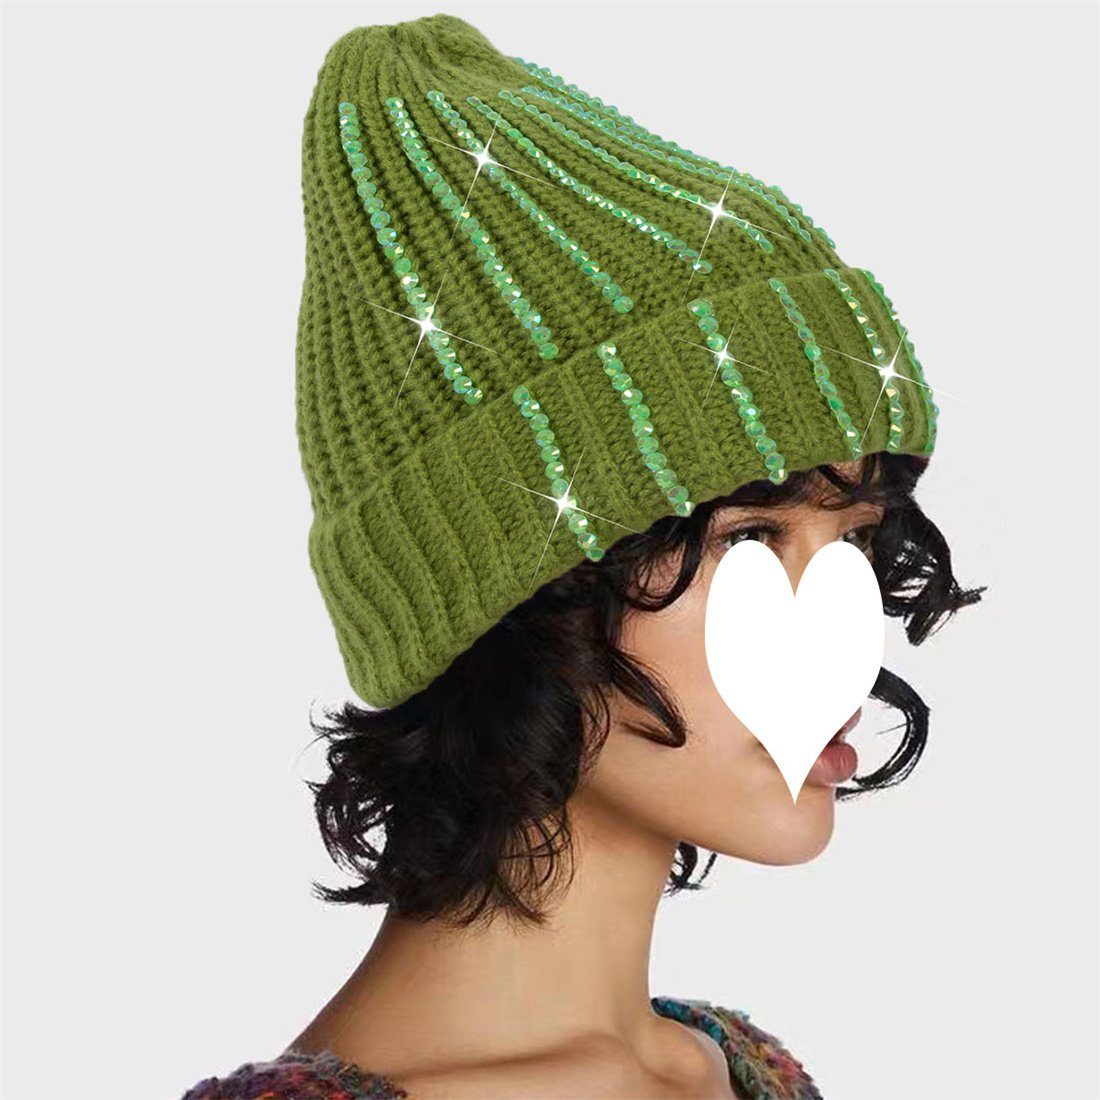 verdickt Damen Wollmütze Strickmütze, Outdoor-Mode Winter DÖRÖY Strickmütze warme grün warme